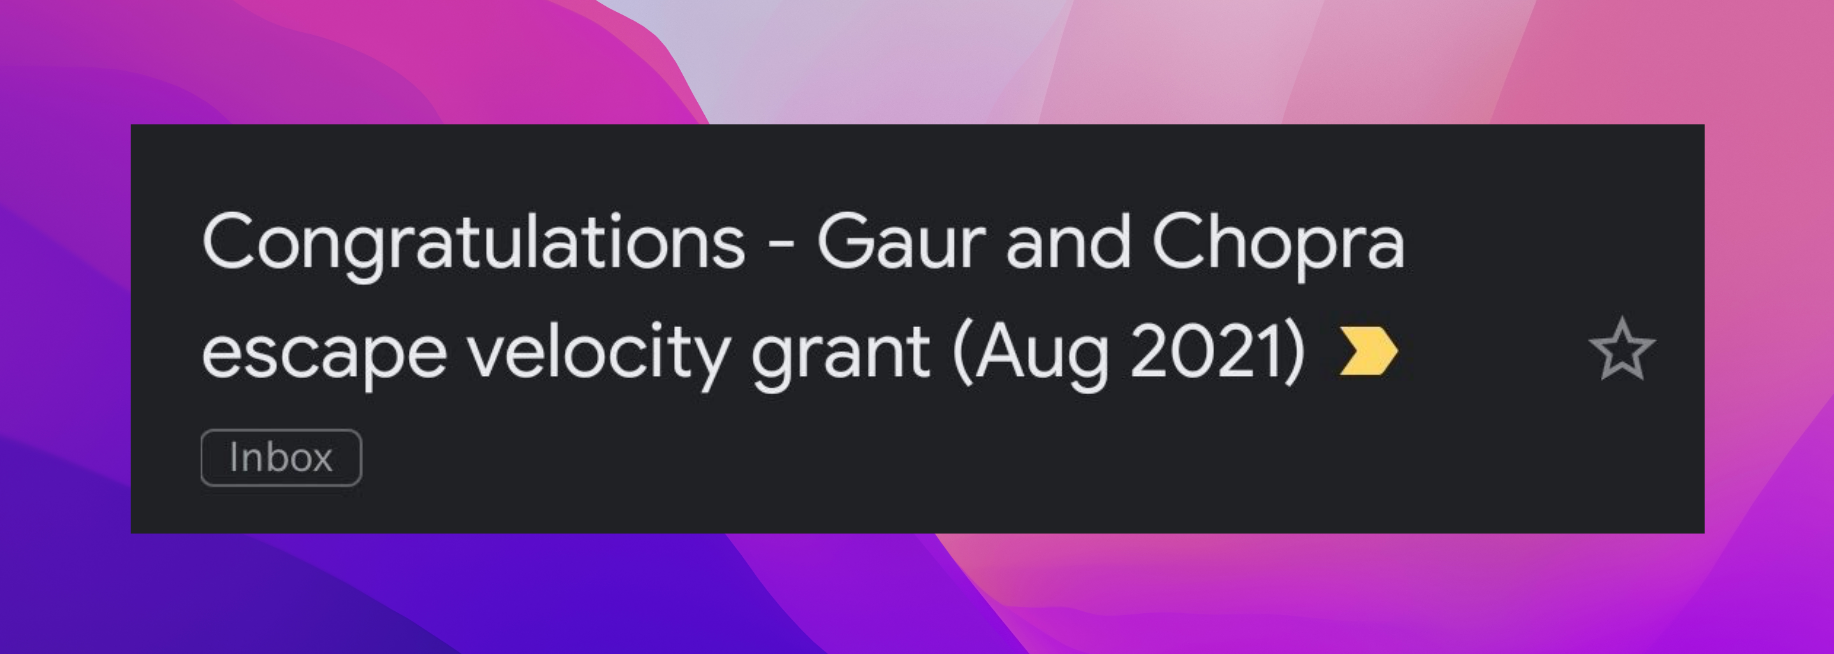 Gaur and Chopra Escape Velocity Grant Email